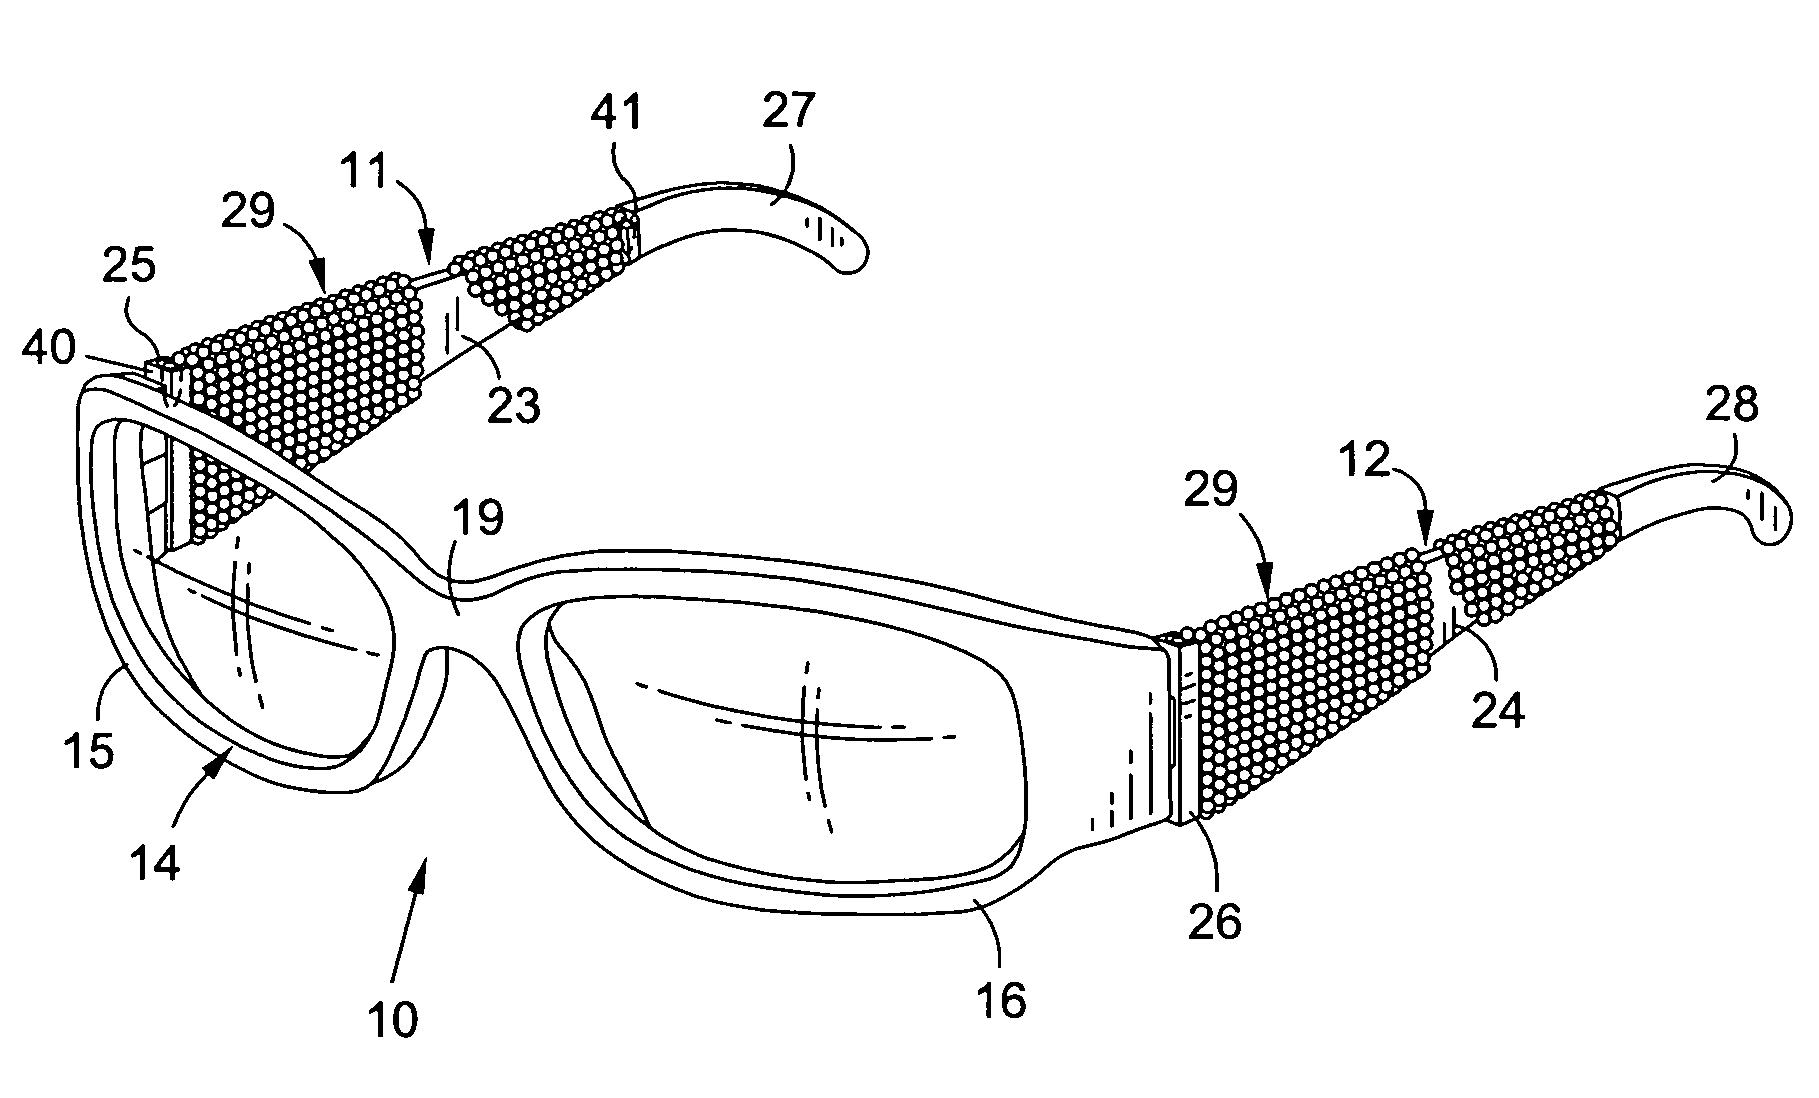 Eyeglass frame incorporating ornamented temple members